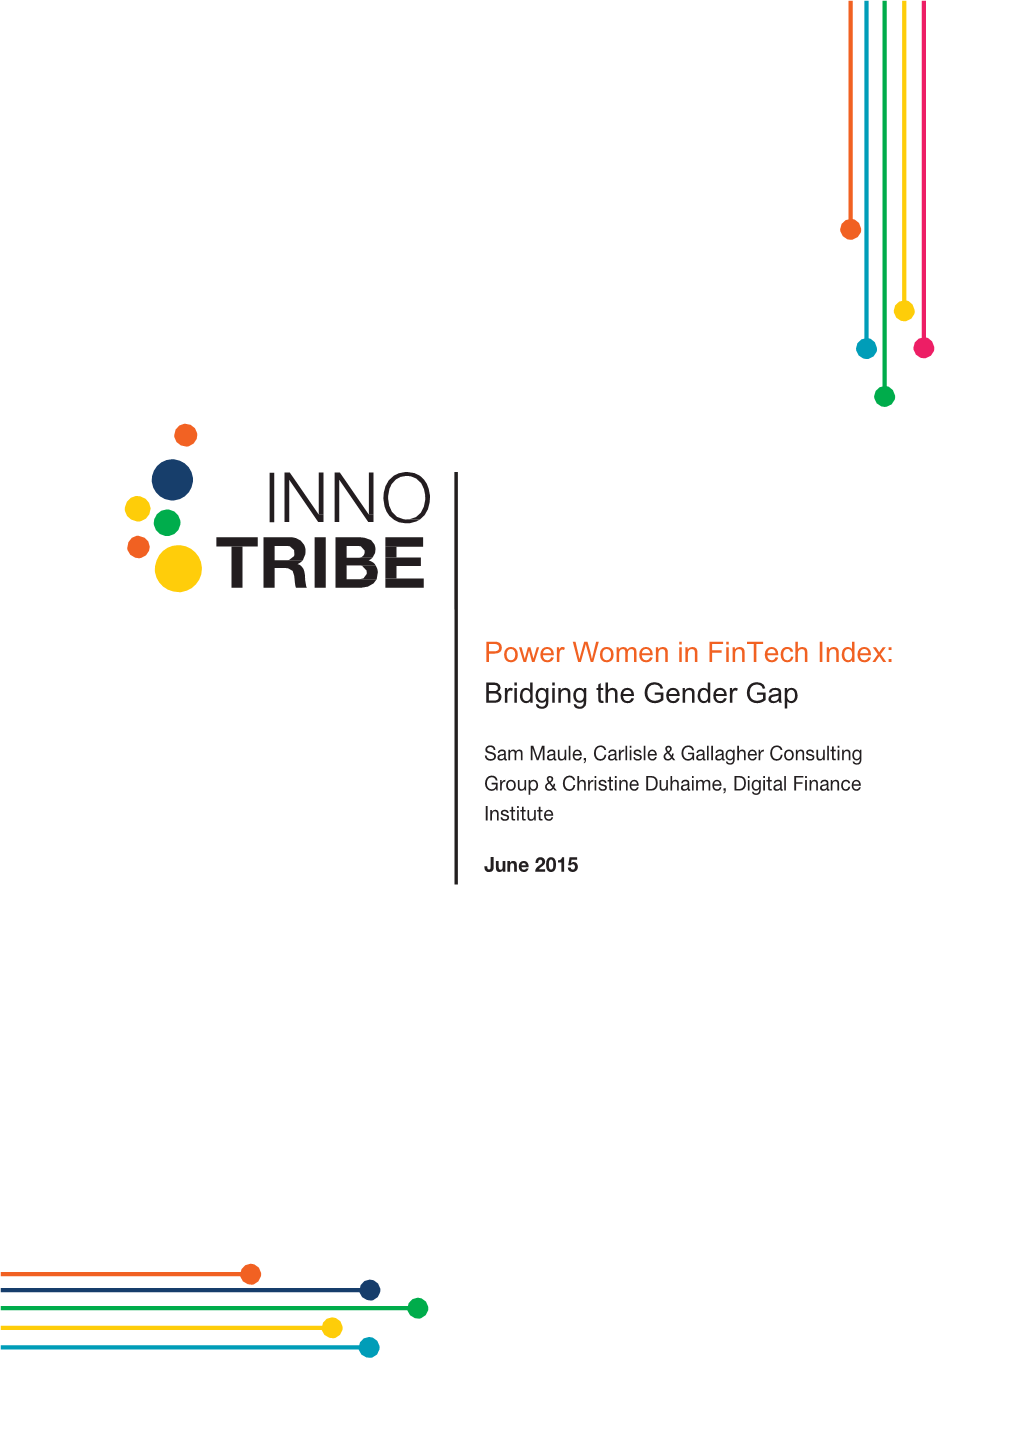 Power Women in Fintech Index: Bridging the Gender Gap